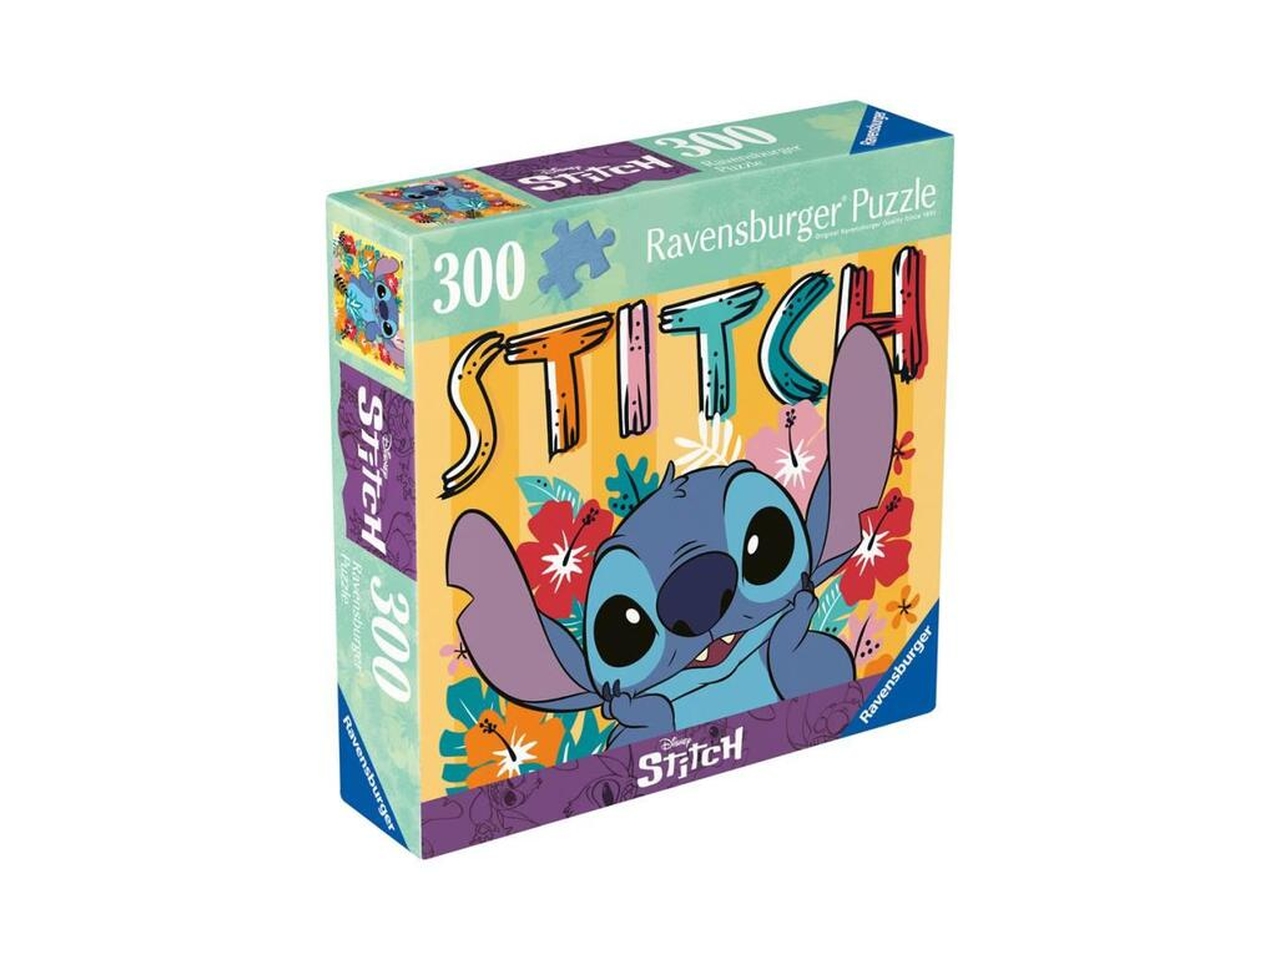 Puzzle stitch 300 pezzi